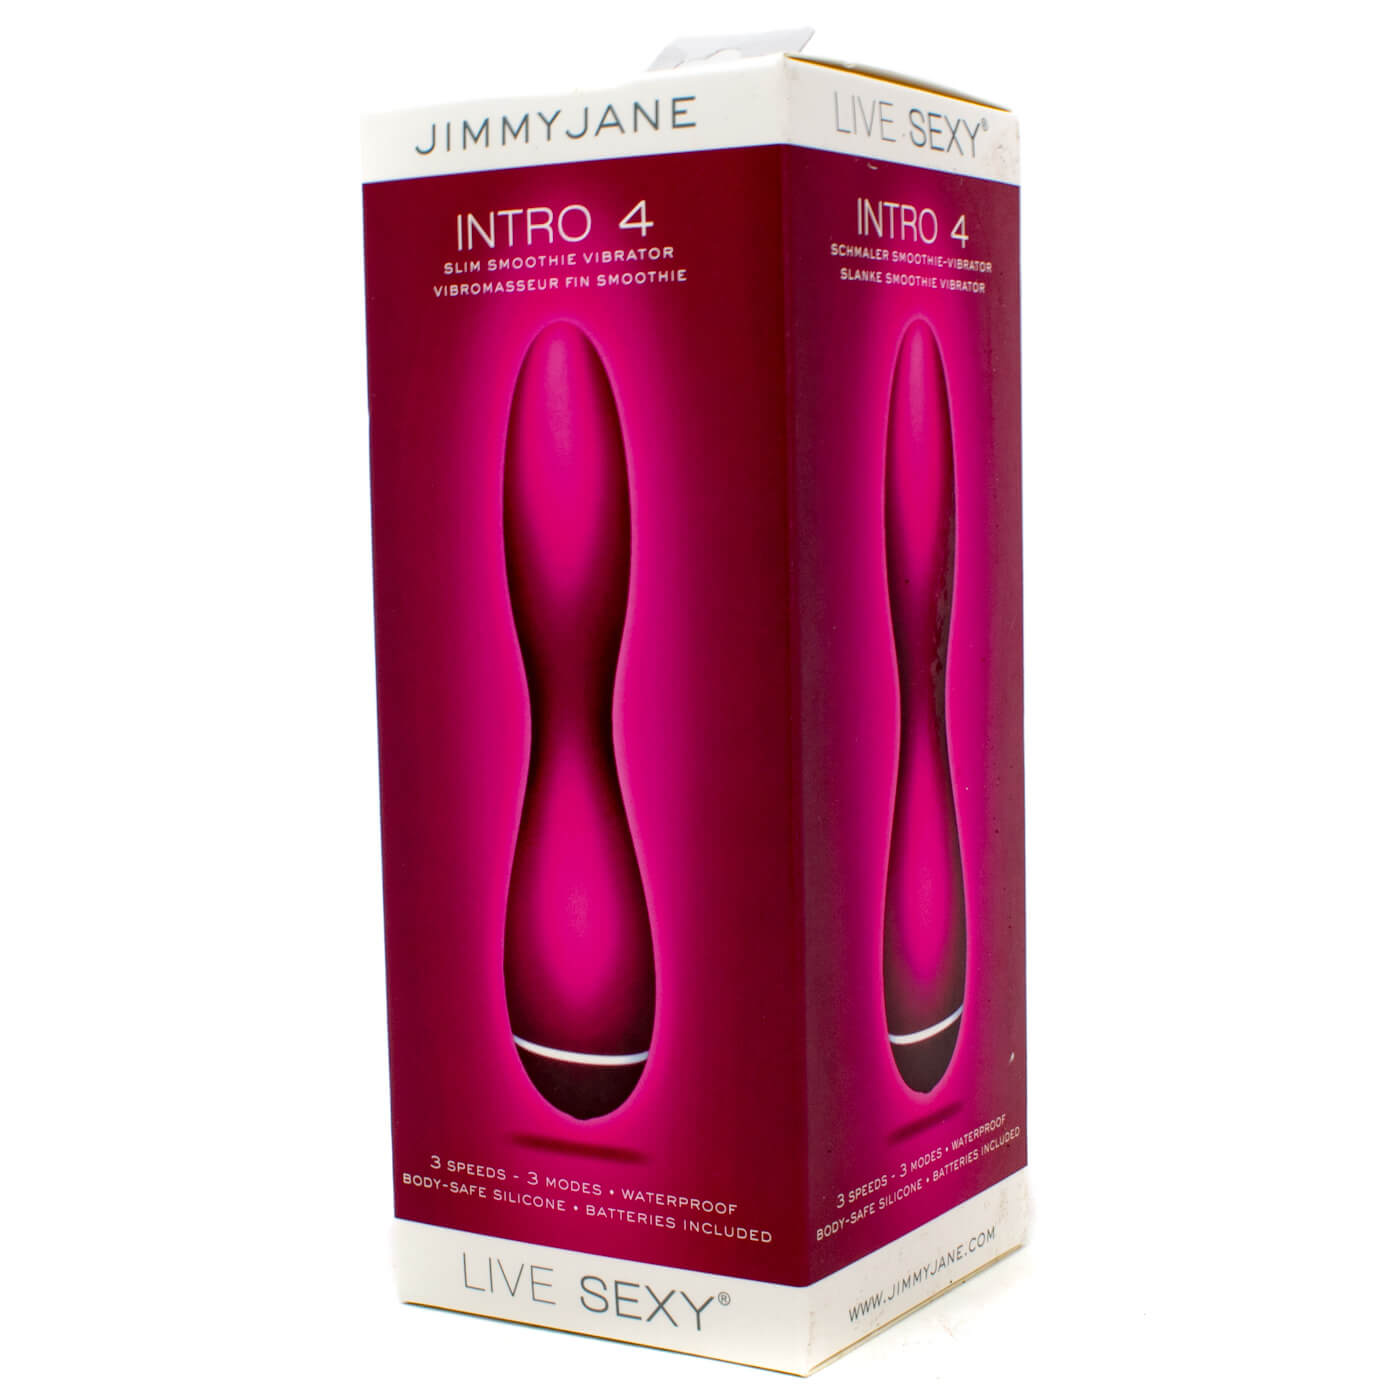 Jimmyjane Intro 4 Luxury Waterproof Silicone Vibrator